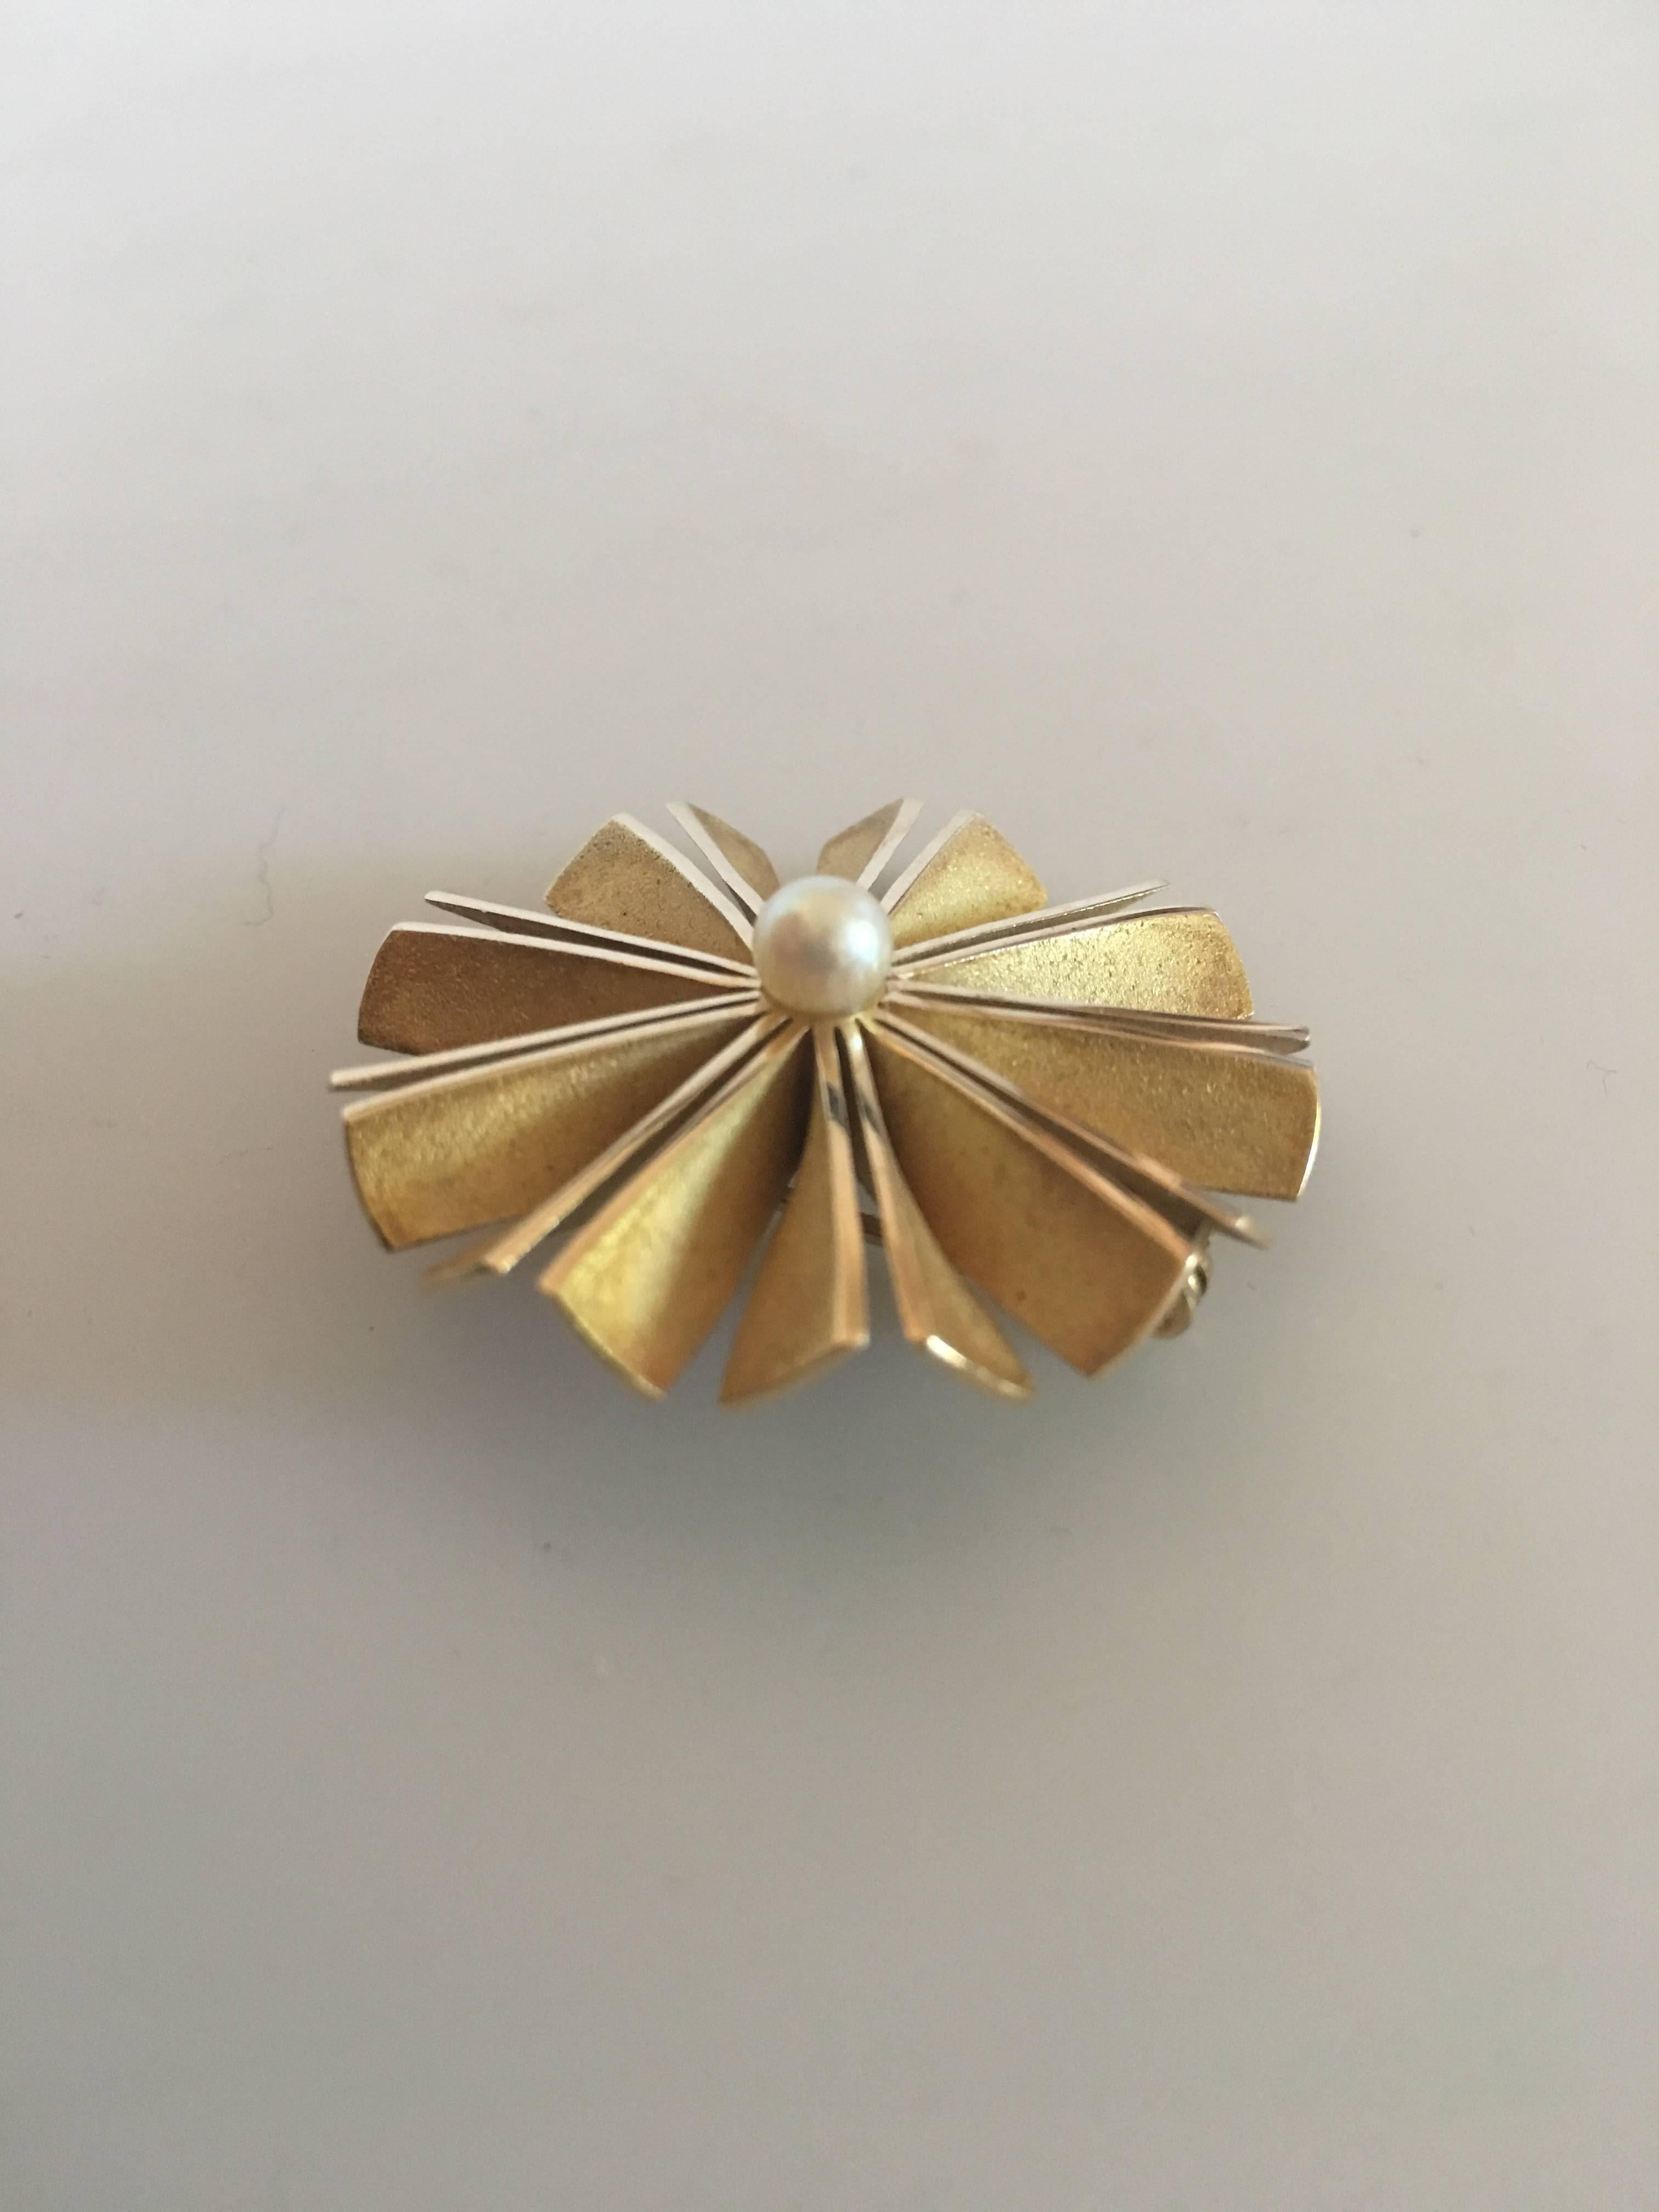 Hans Hansen 14K Round Gold Brooch with Pearl. Measures 3.3 cm diameter (1 19/64